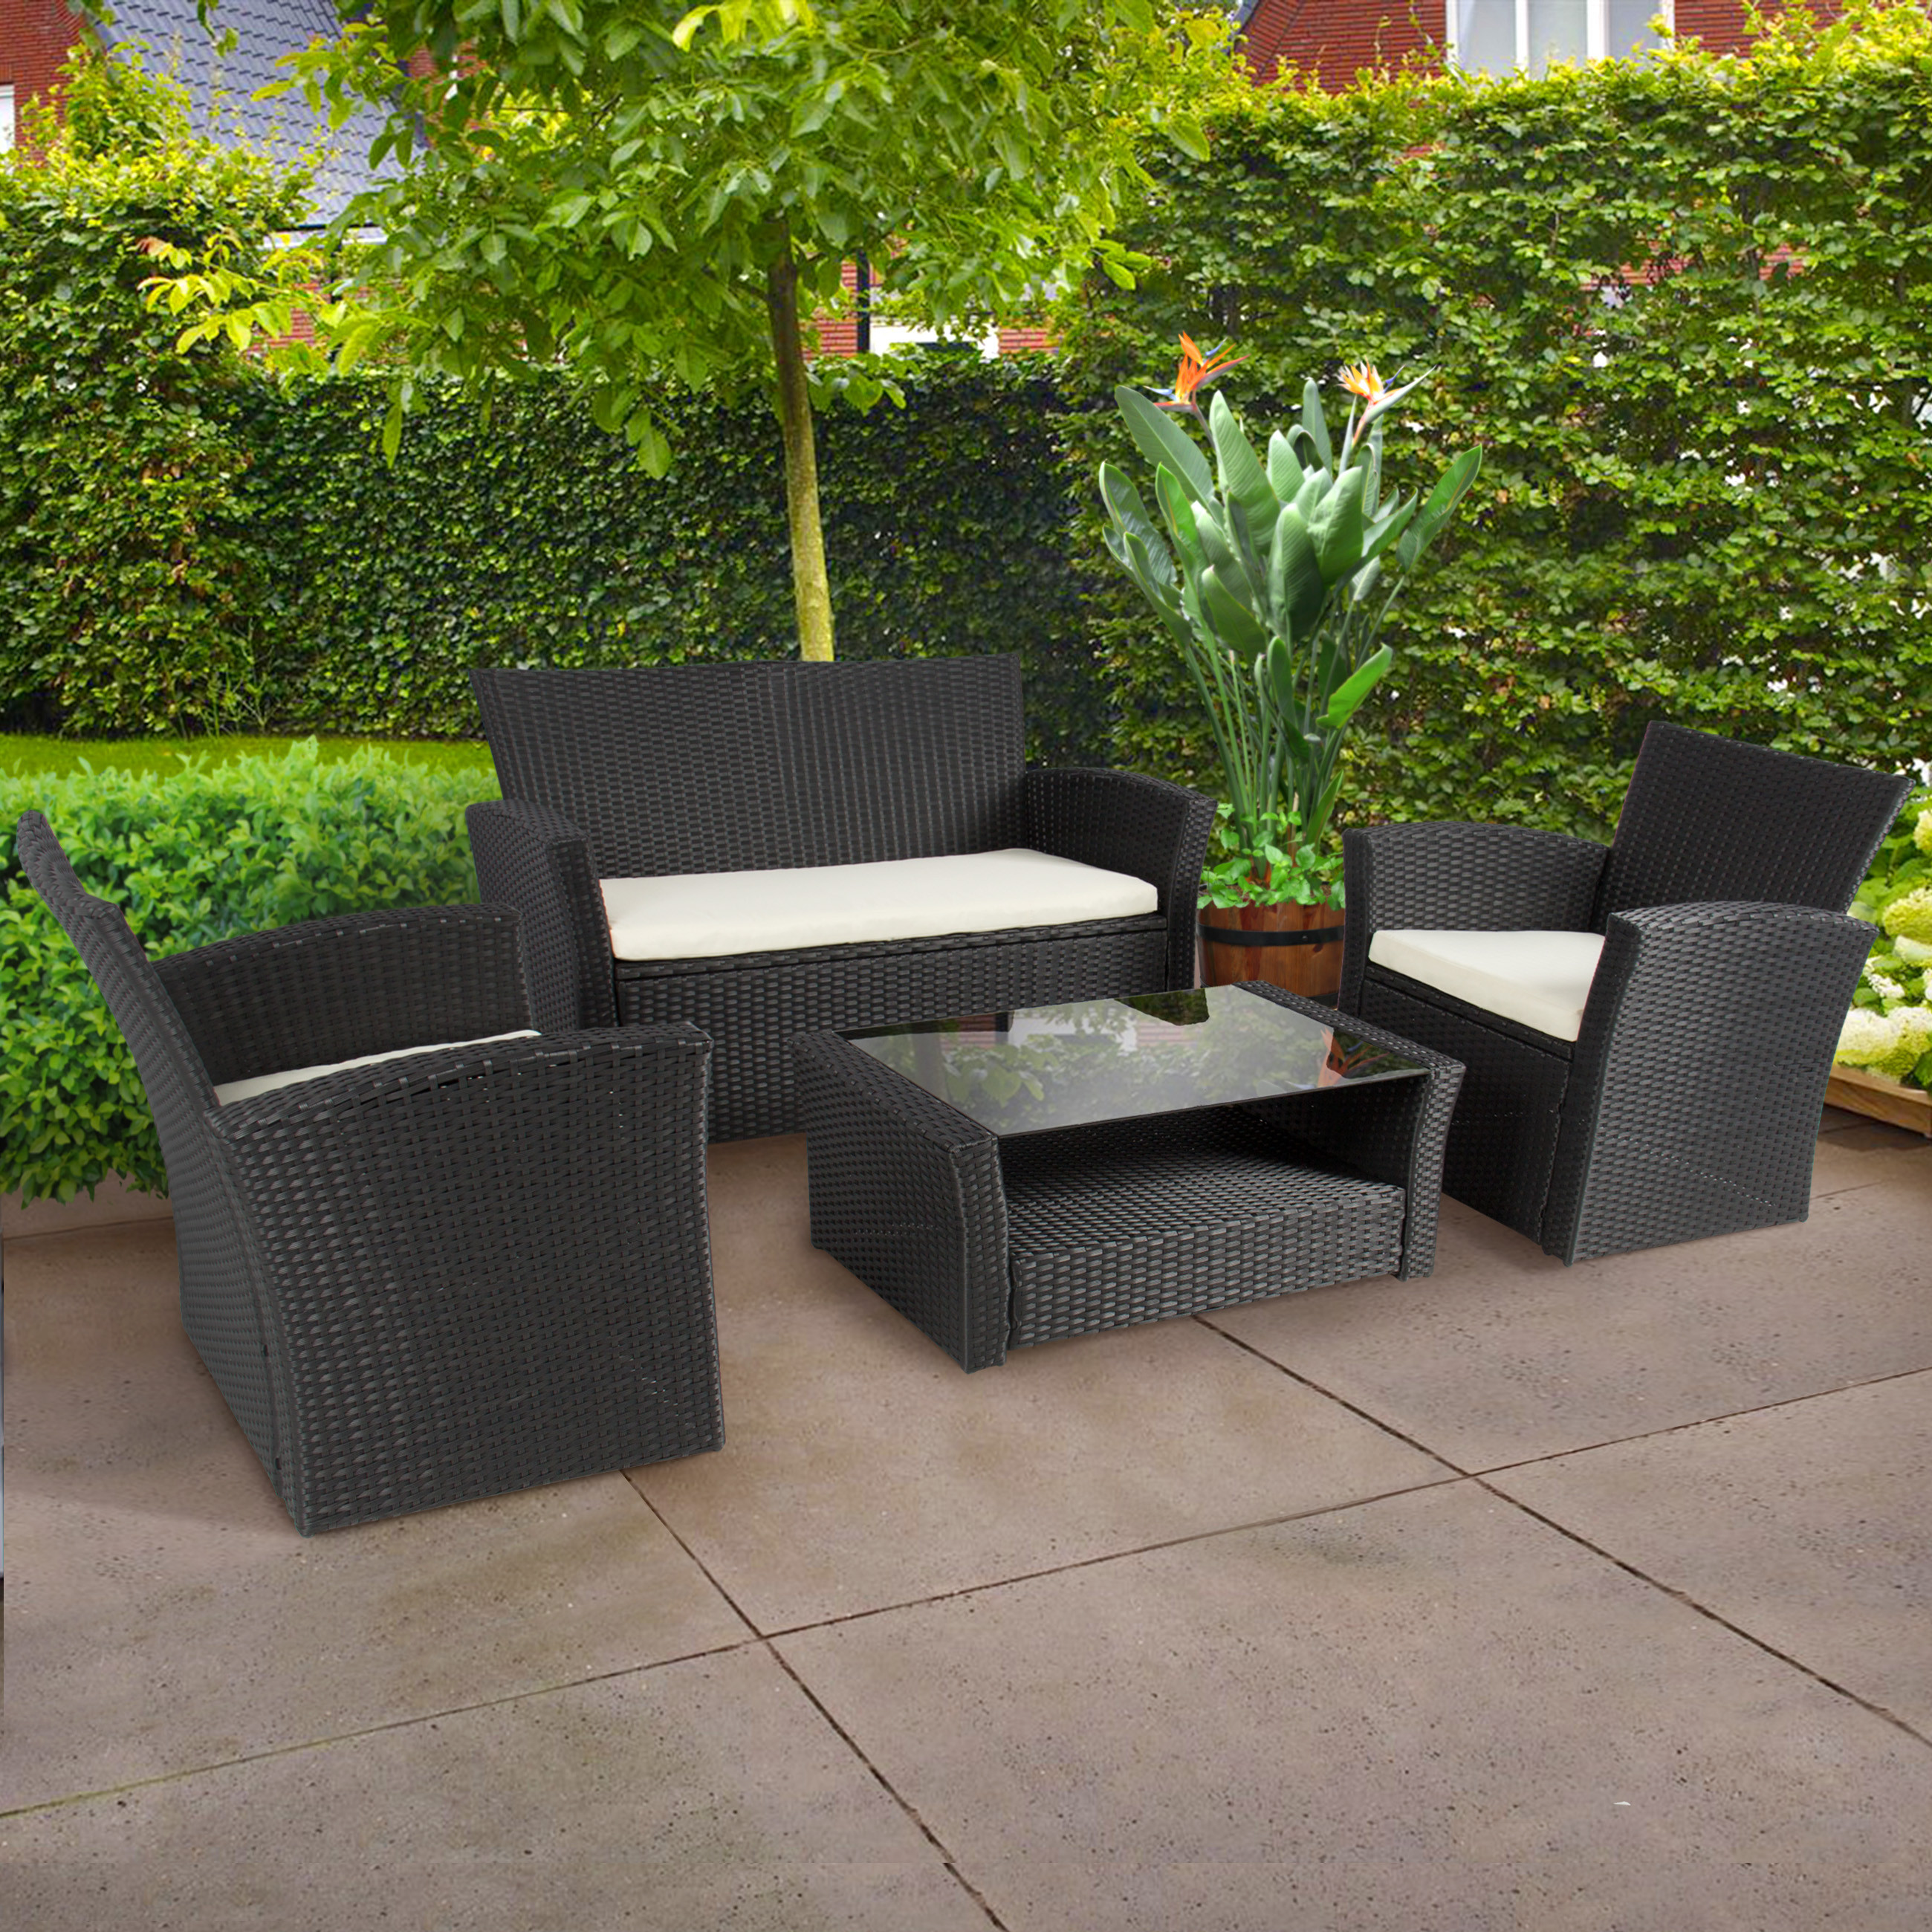 Best ideas about Outdoor Patio Furniture Sale
. Save or Pin Pc Outdoor Patio Garden Furniture Wicker Rattan Sofa Set Now.